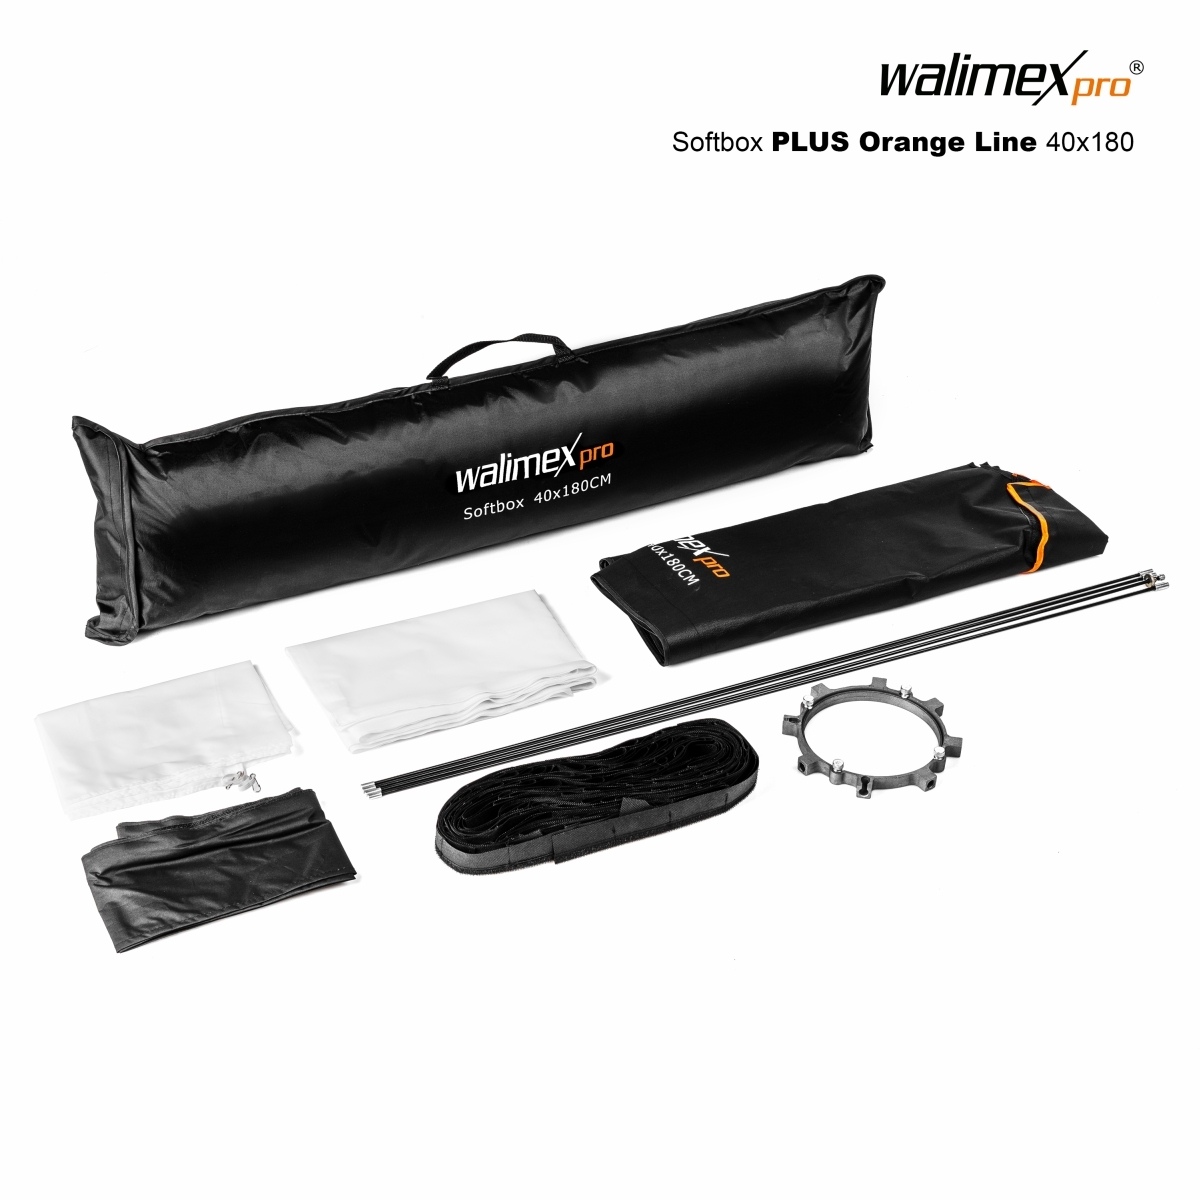 Walimex pro Softbox PLUS Orange Line 40x180